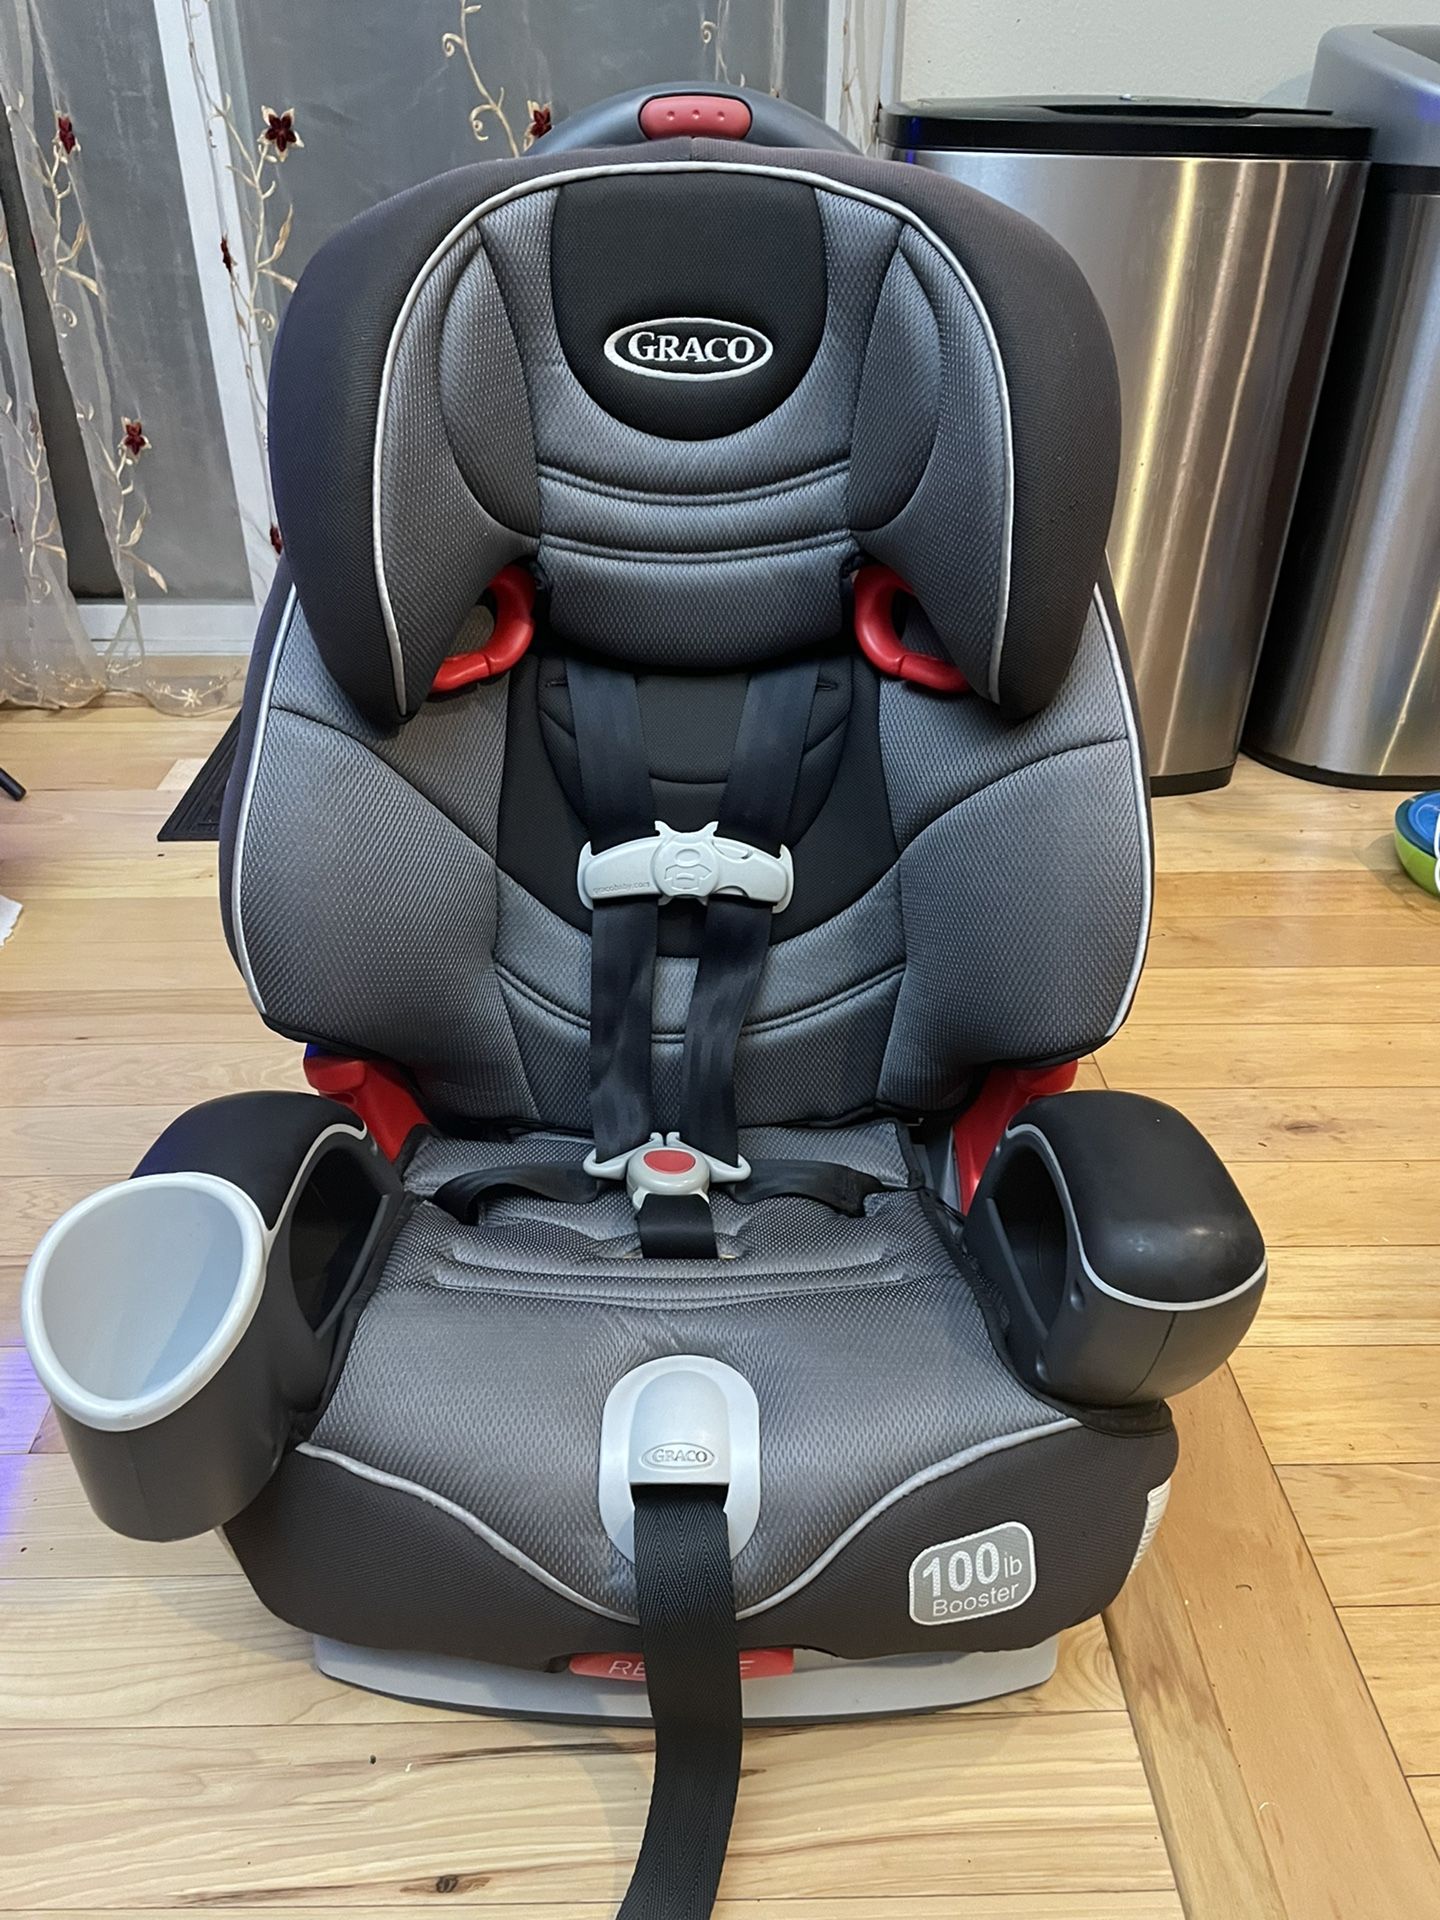 $80 - Like New !! Graco  Nautilus 3-in-1 Car Seat